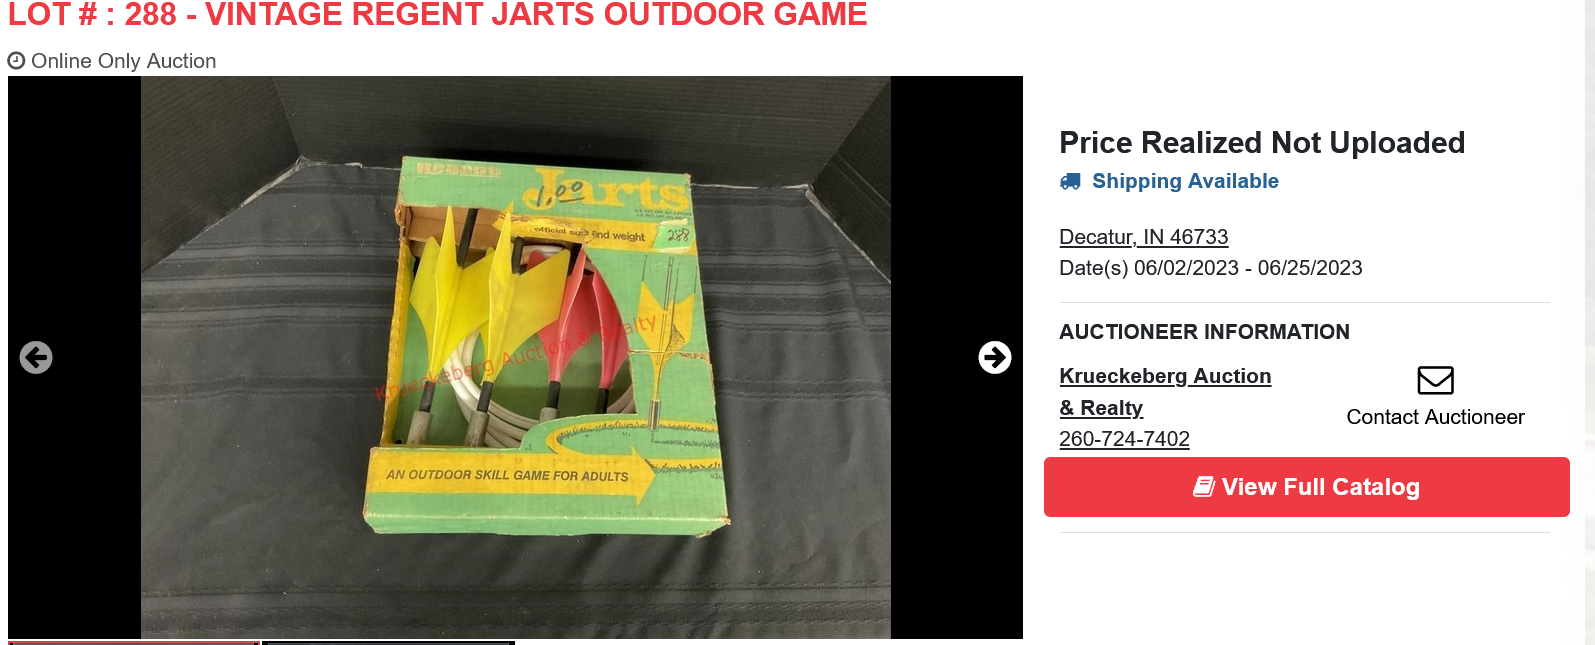 Screenshot 2023-07-15 at 17-41-43 Vintage Regent Jarts Outdoor Game Krueckeberg Auction & Realty.png